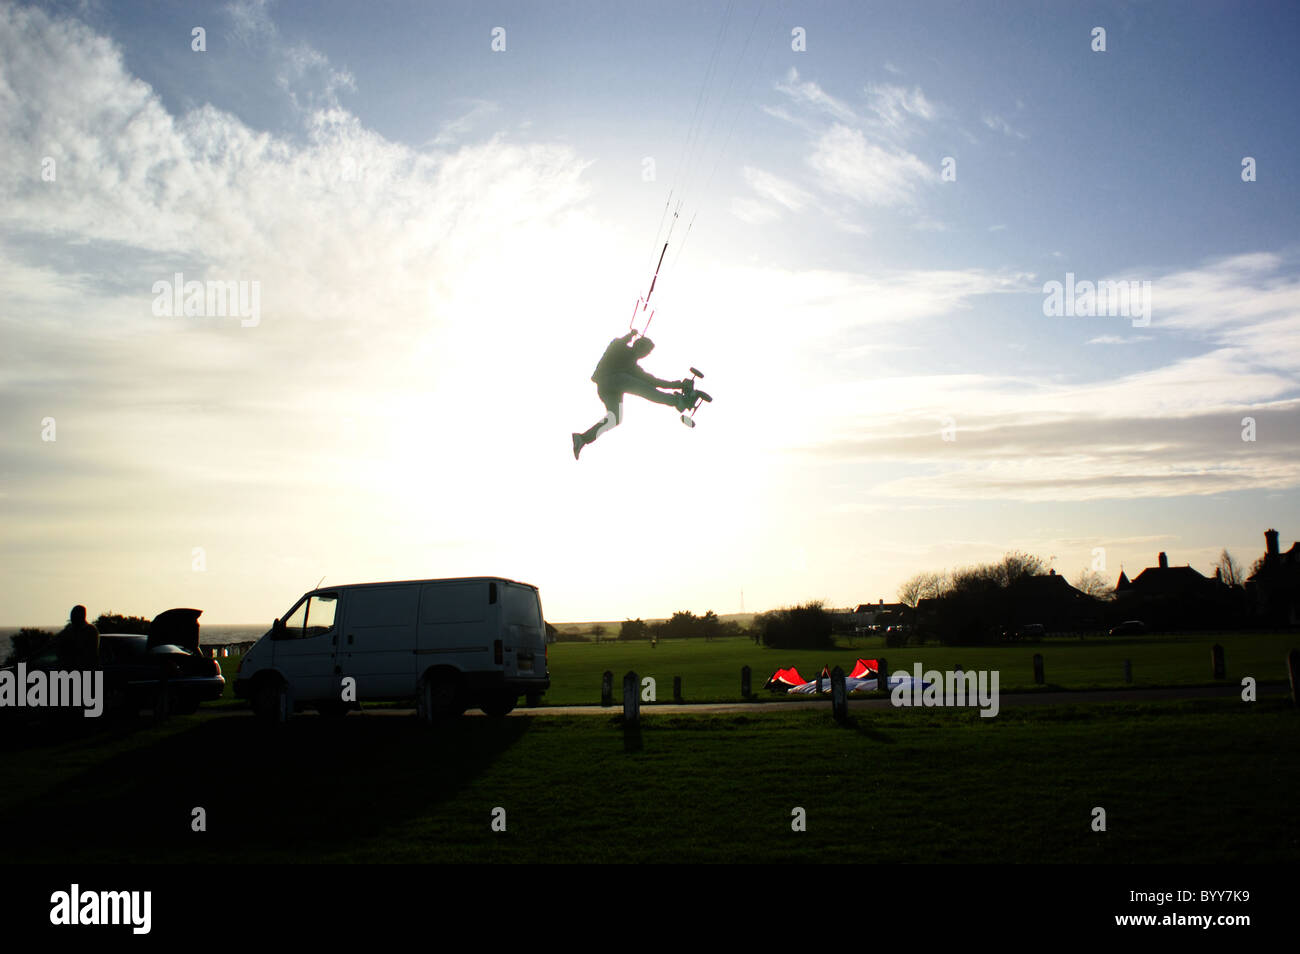 Extreme sport kiteboarding in Frinton-on-sea Stock Photo